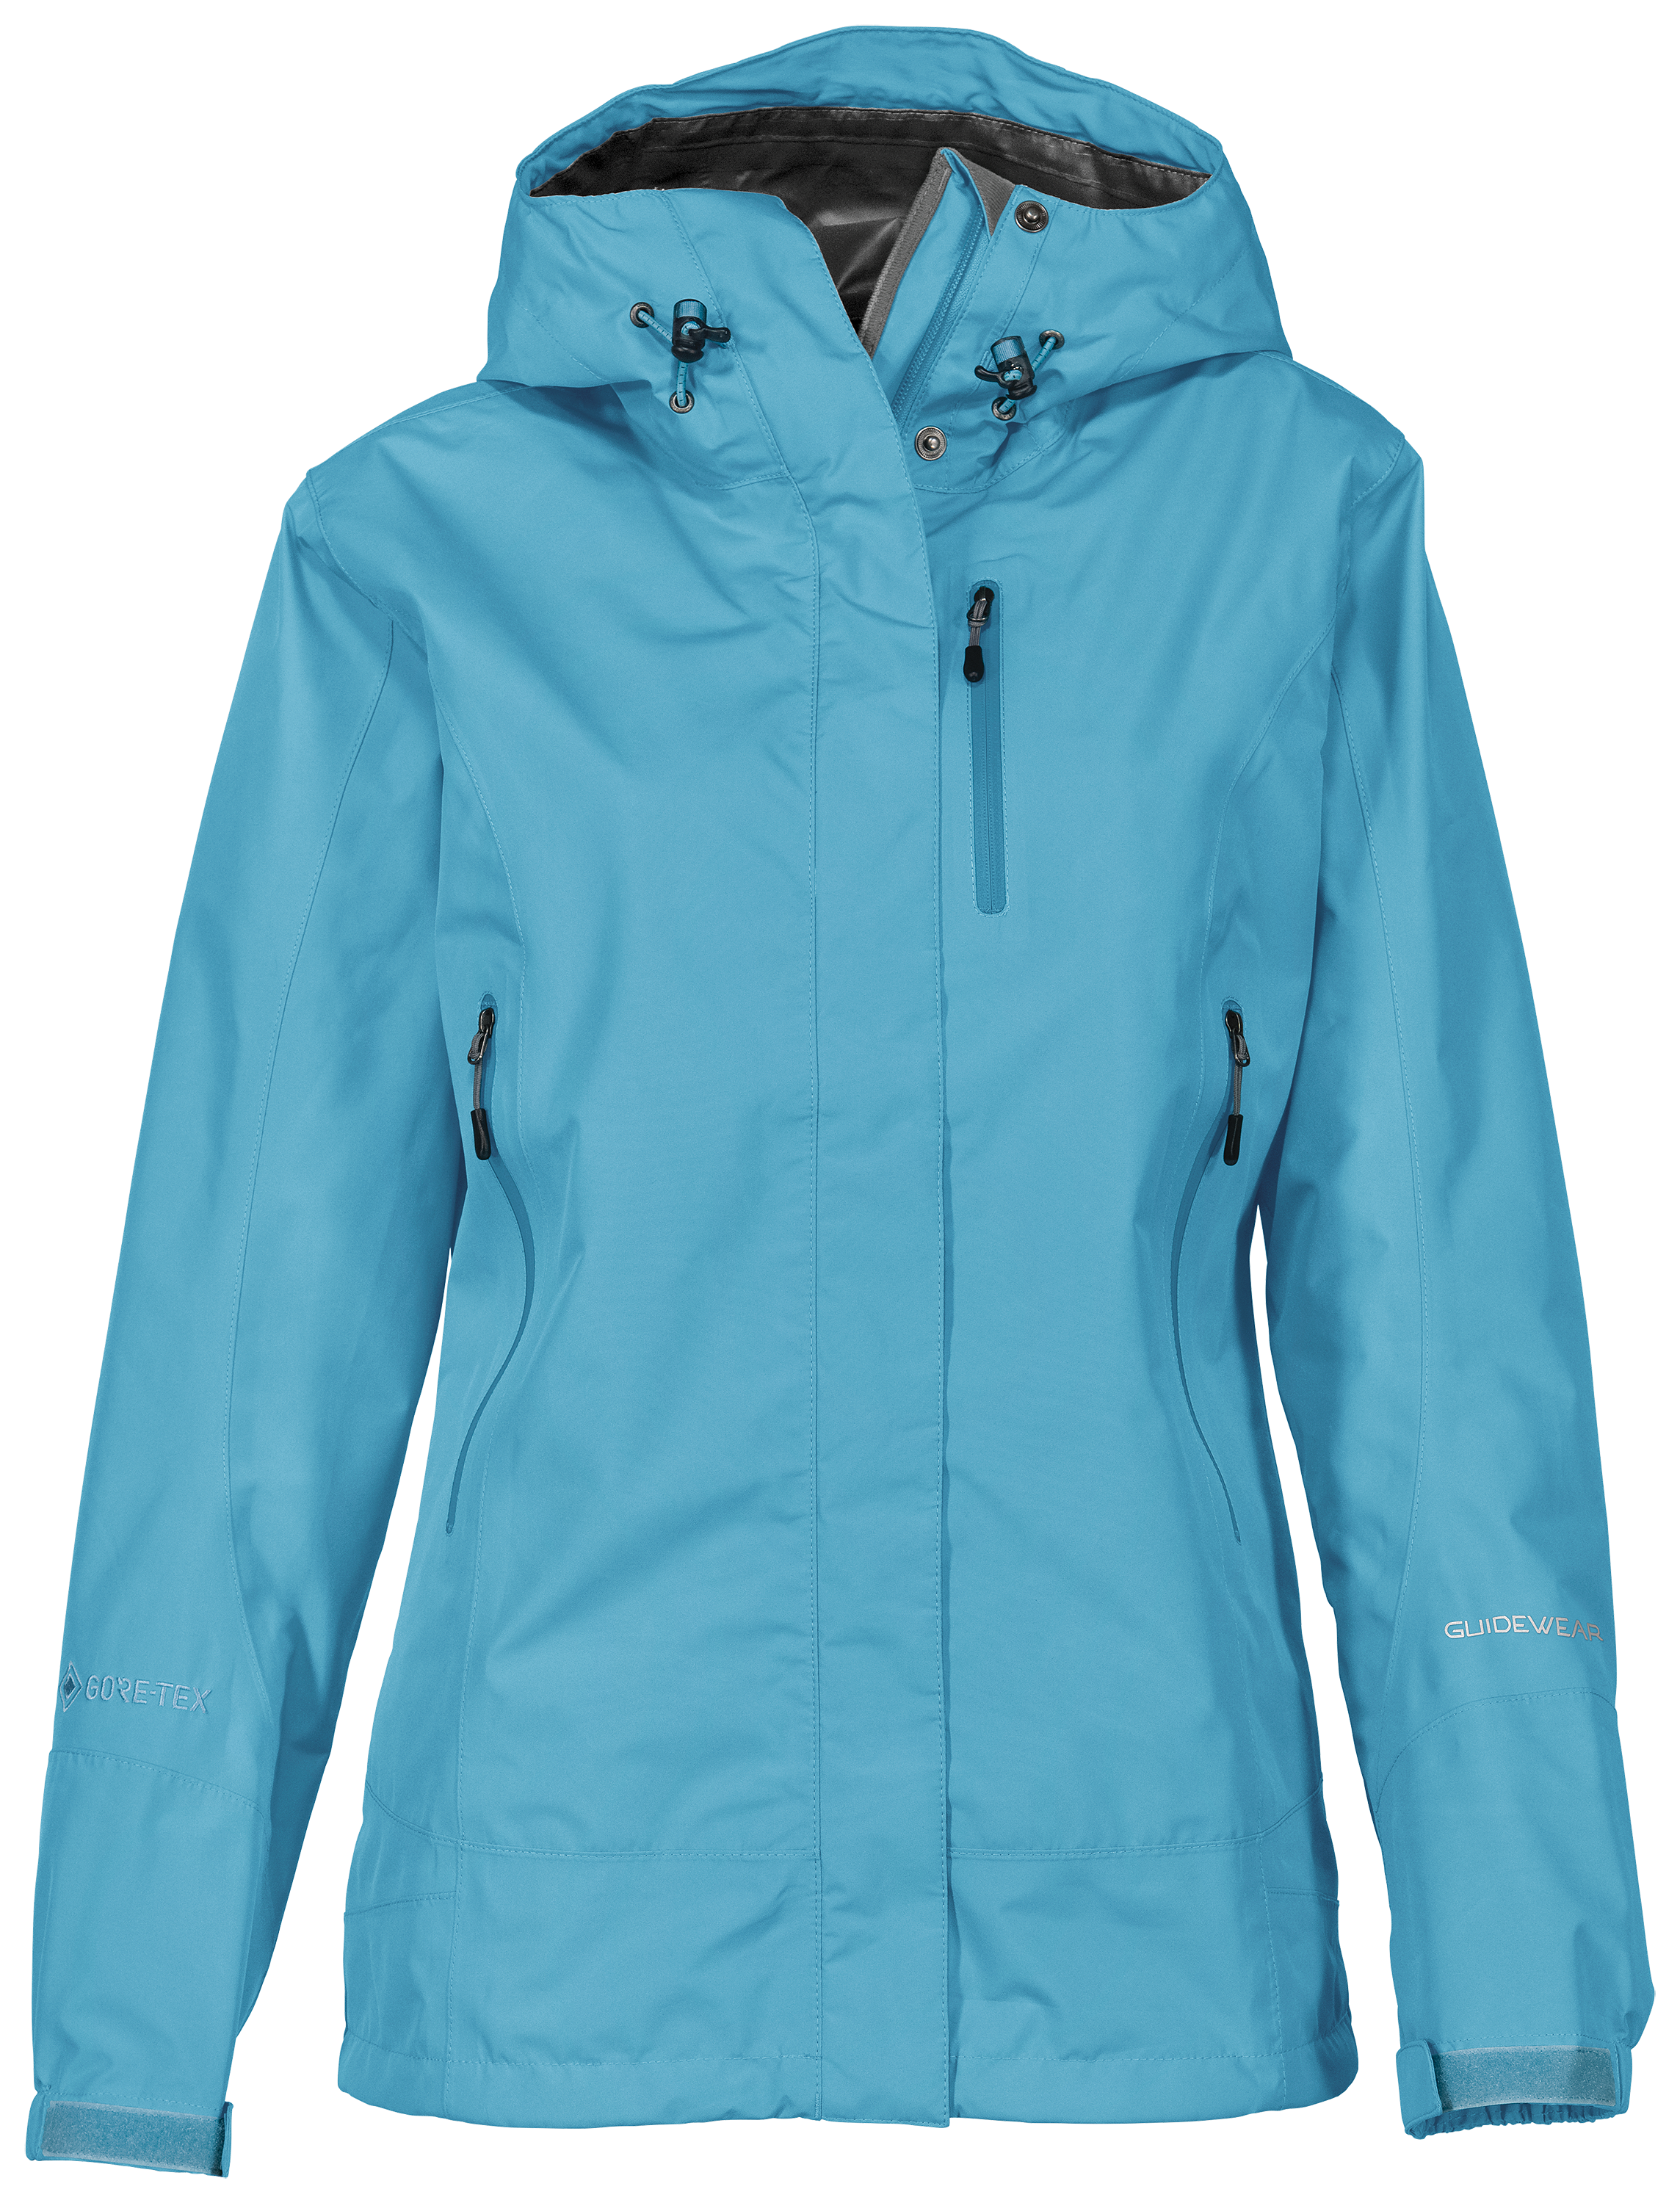 Johnny Morris Bass Pro Shops Guidewear Rainy River Jacket with GORE-TEX PacLite for Ladies - Delphinium Blue - L